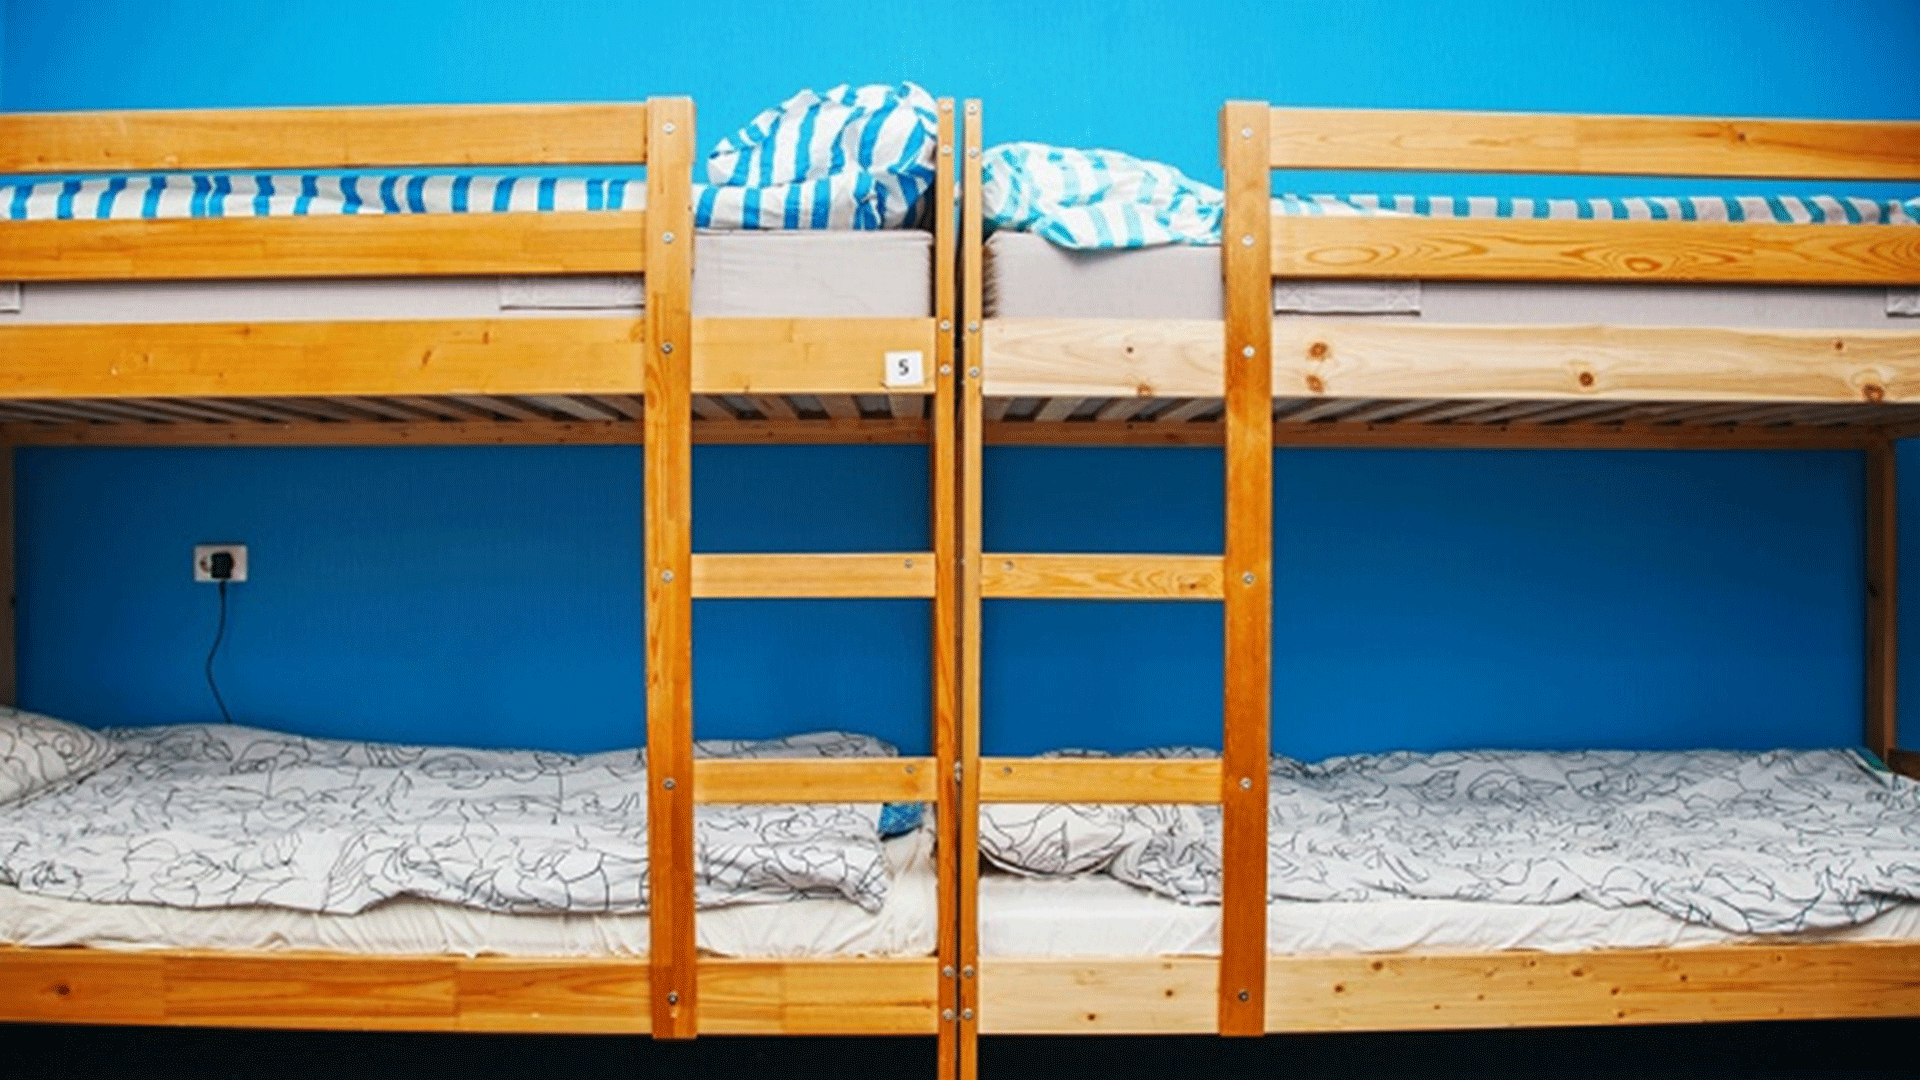 accomodation-beds-bunks